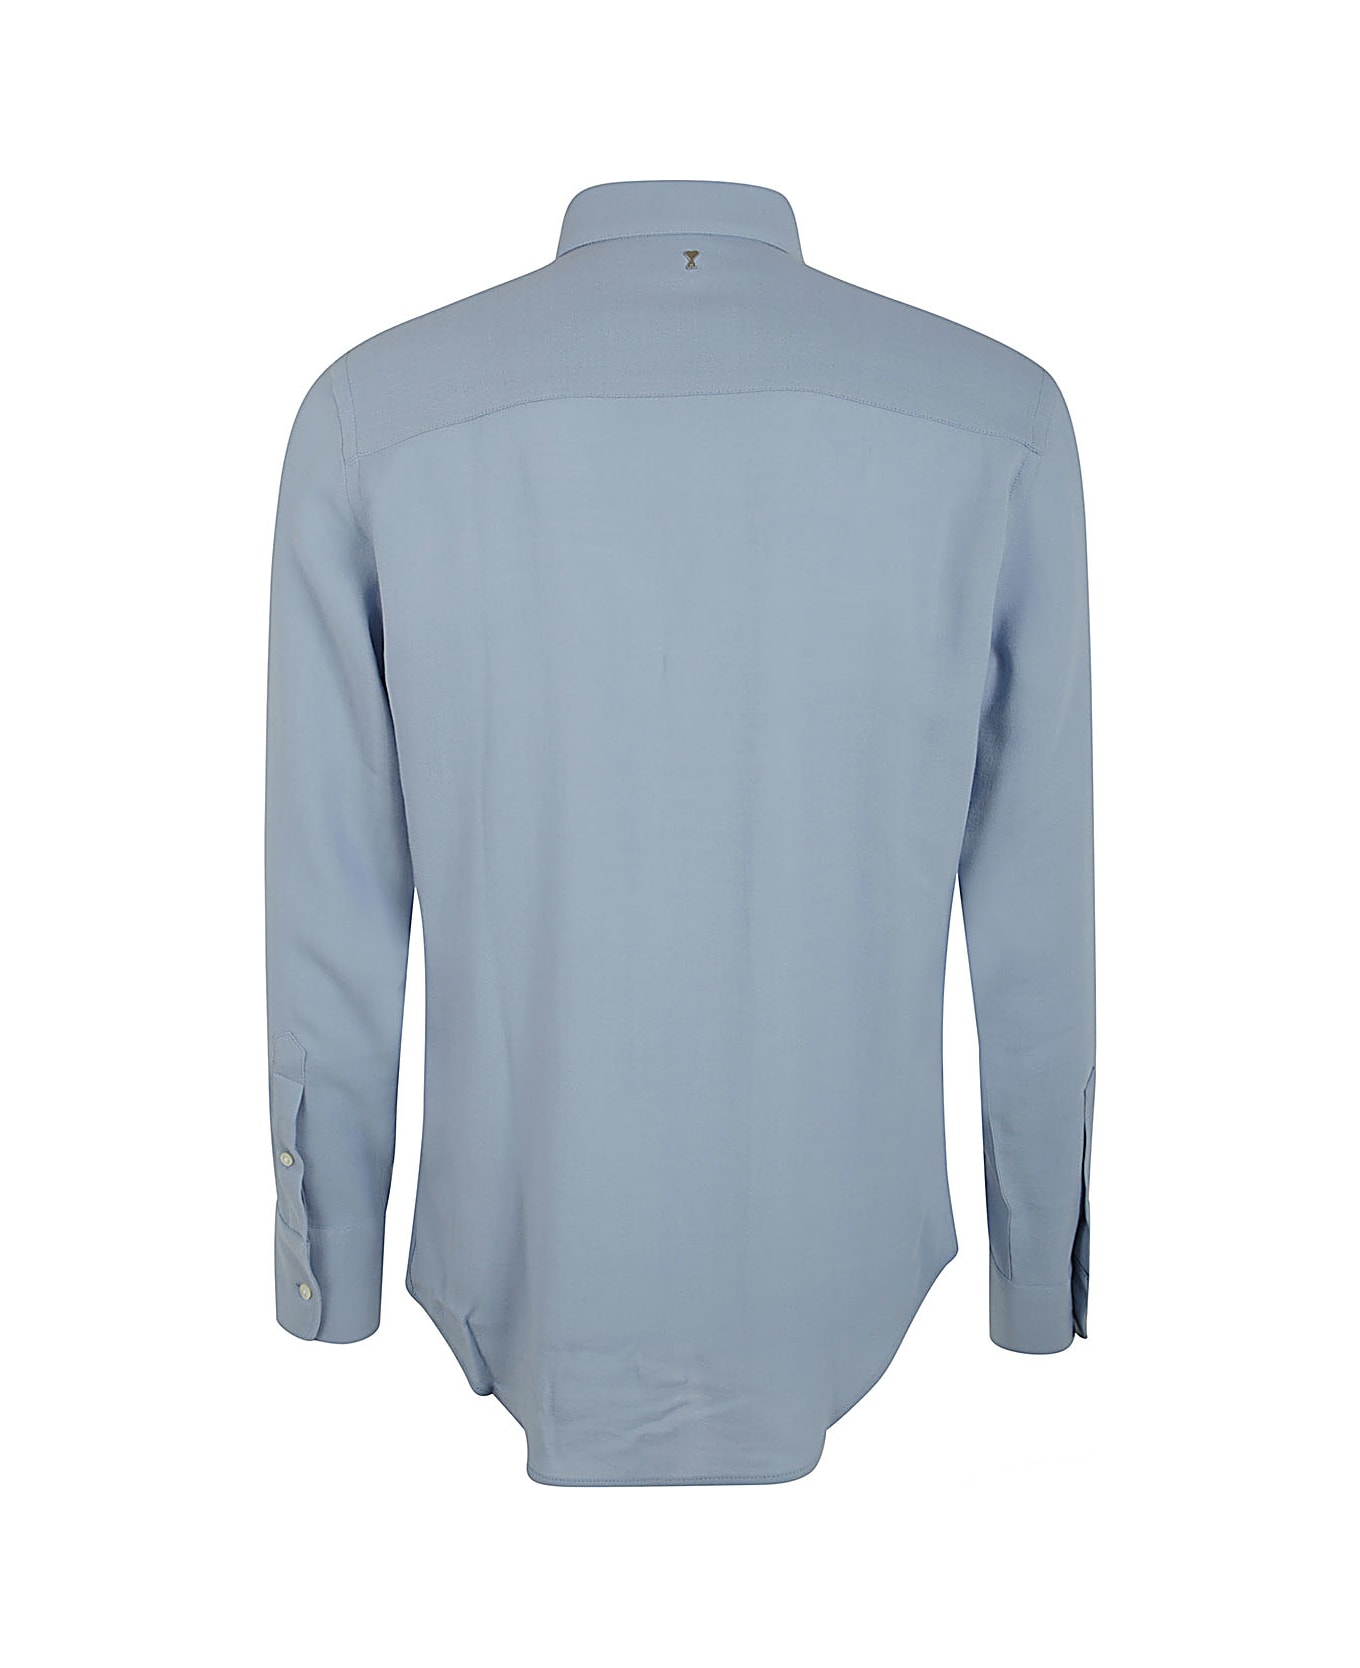 Ami Alexandre Mattiussi Classic Shirt - Cashmere Blue シャツ